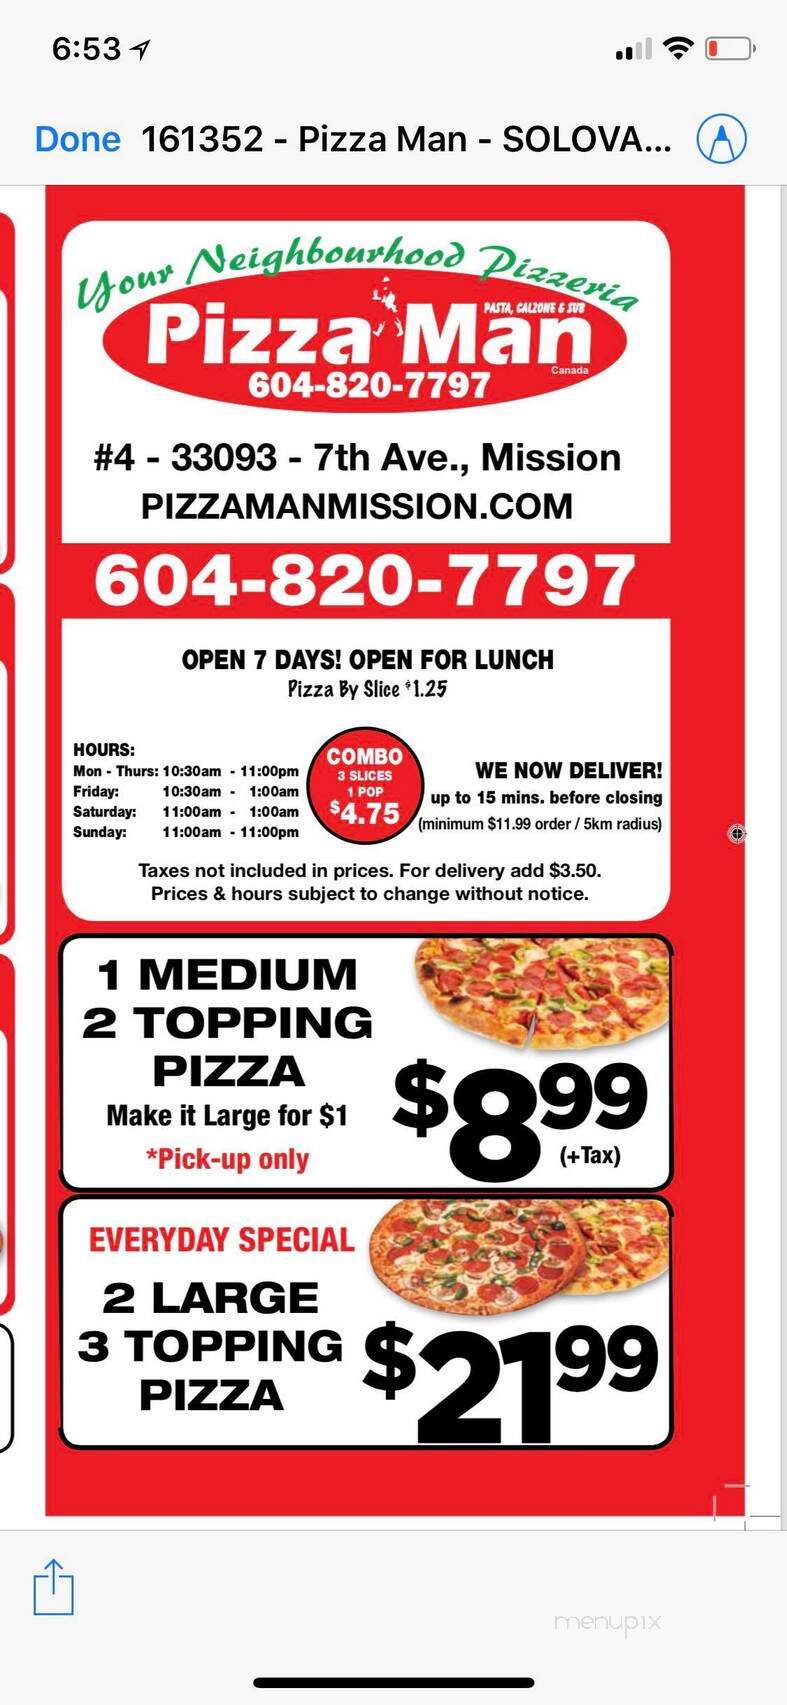 Pizza Man - Mission, BC